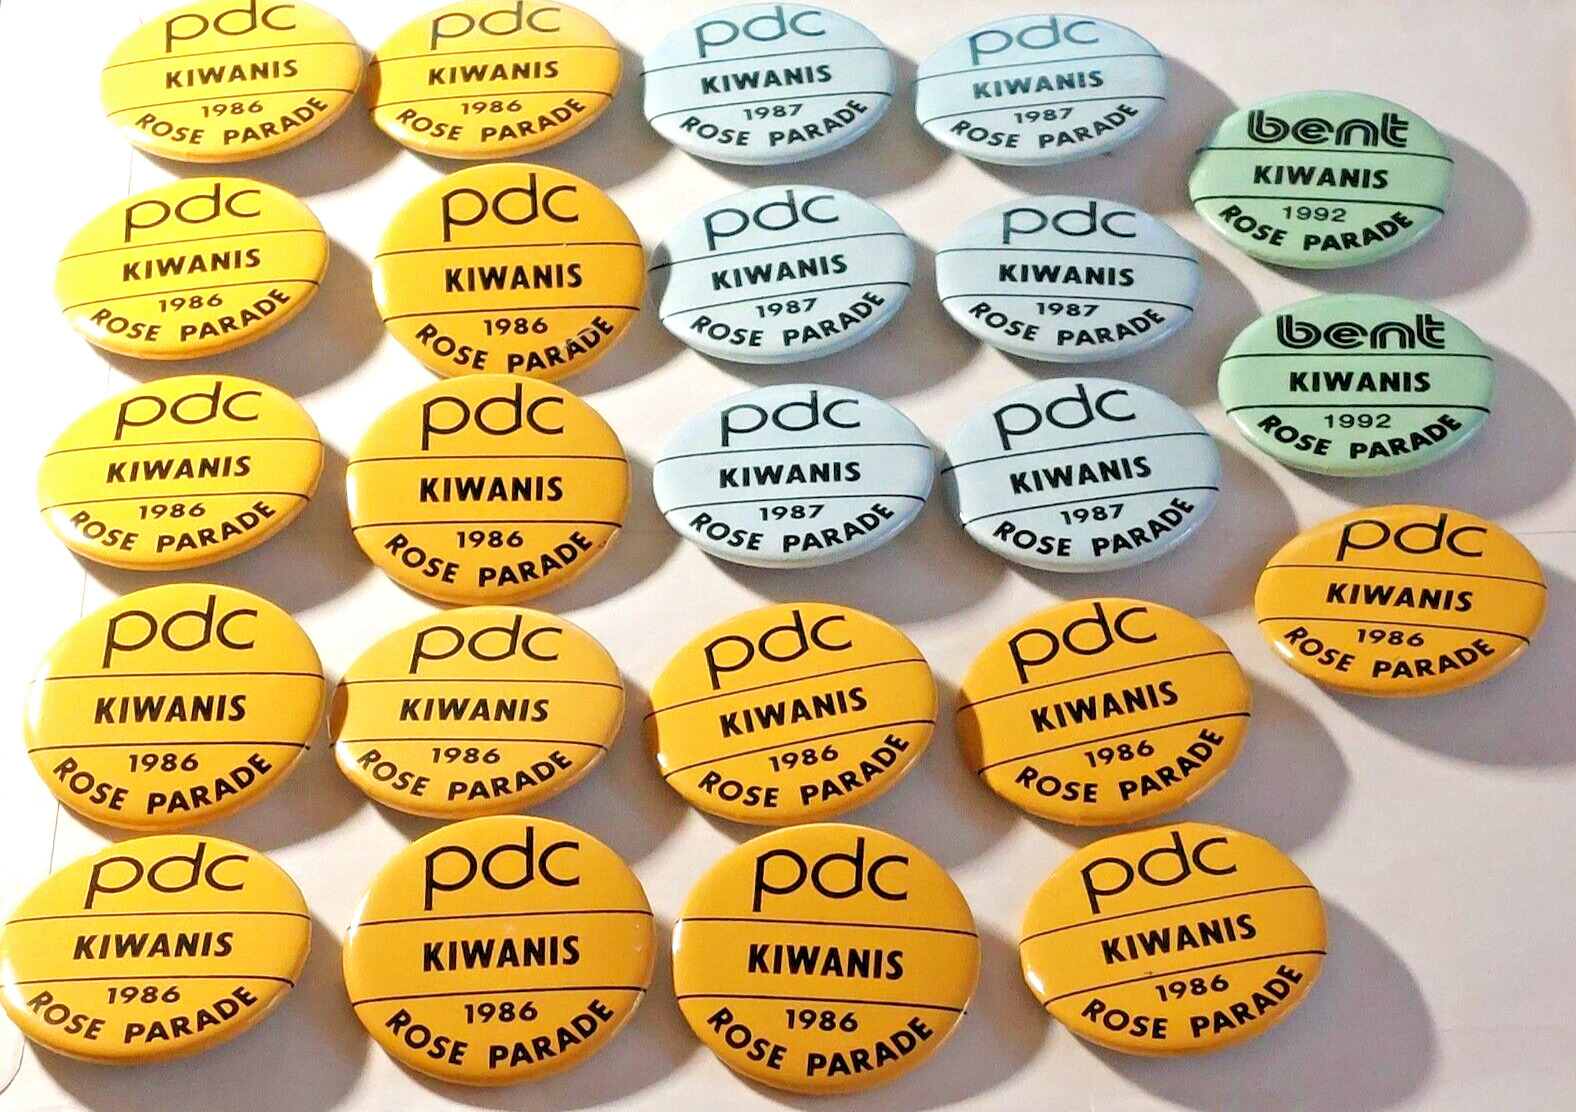 Rose Parade PDC Kiwanis Button Pins (15-1986/6-1987/2-1992) Lot of 23